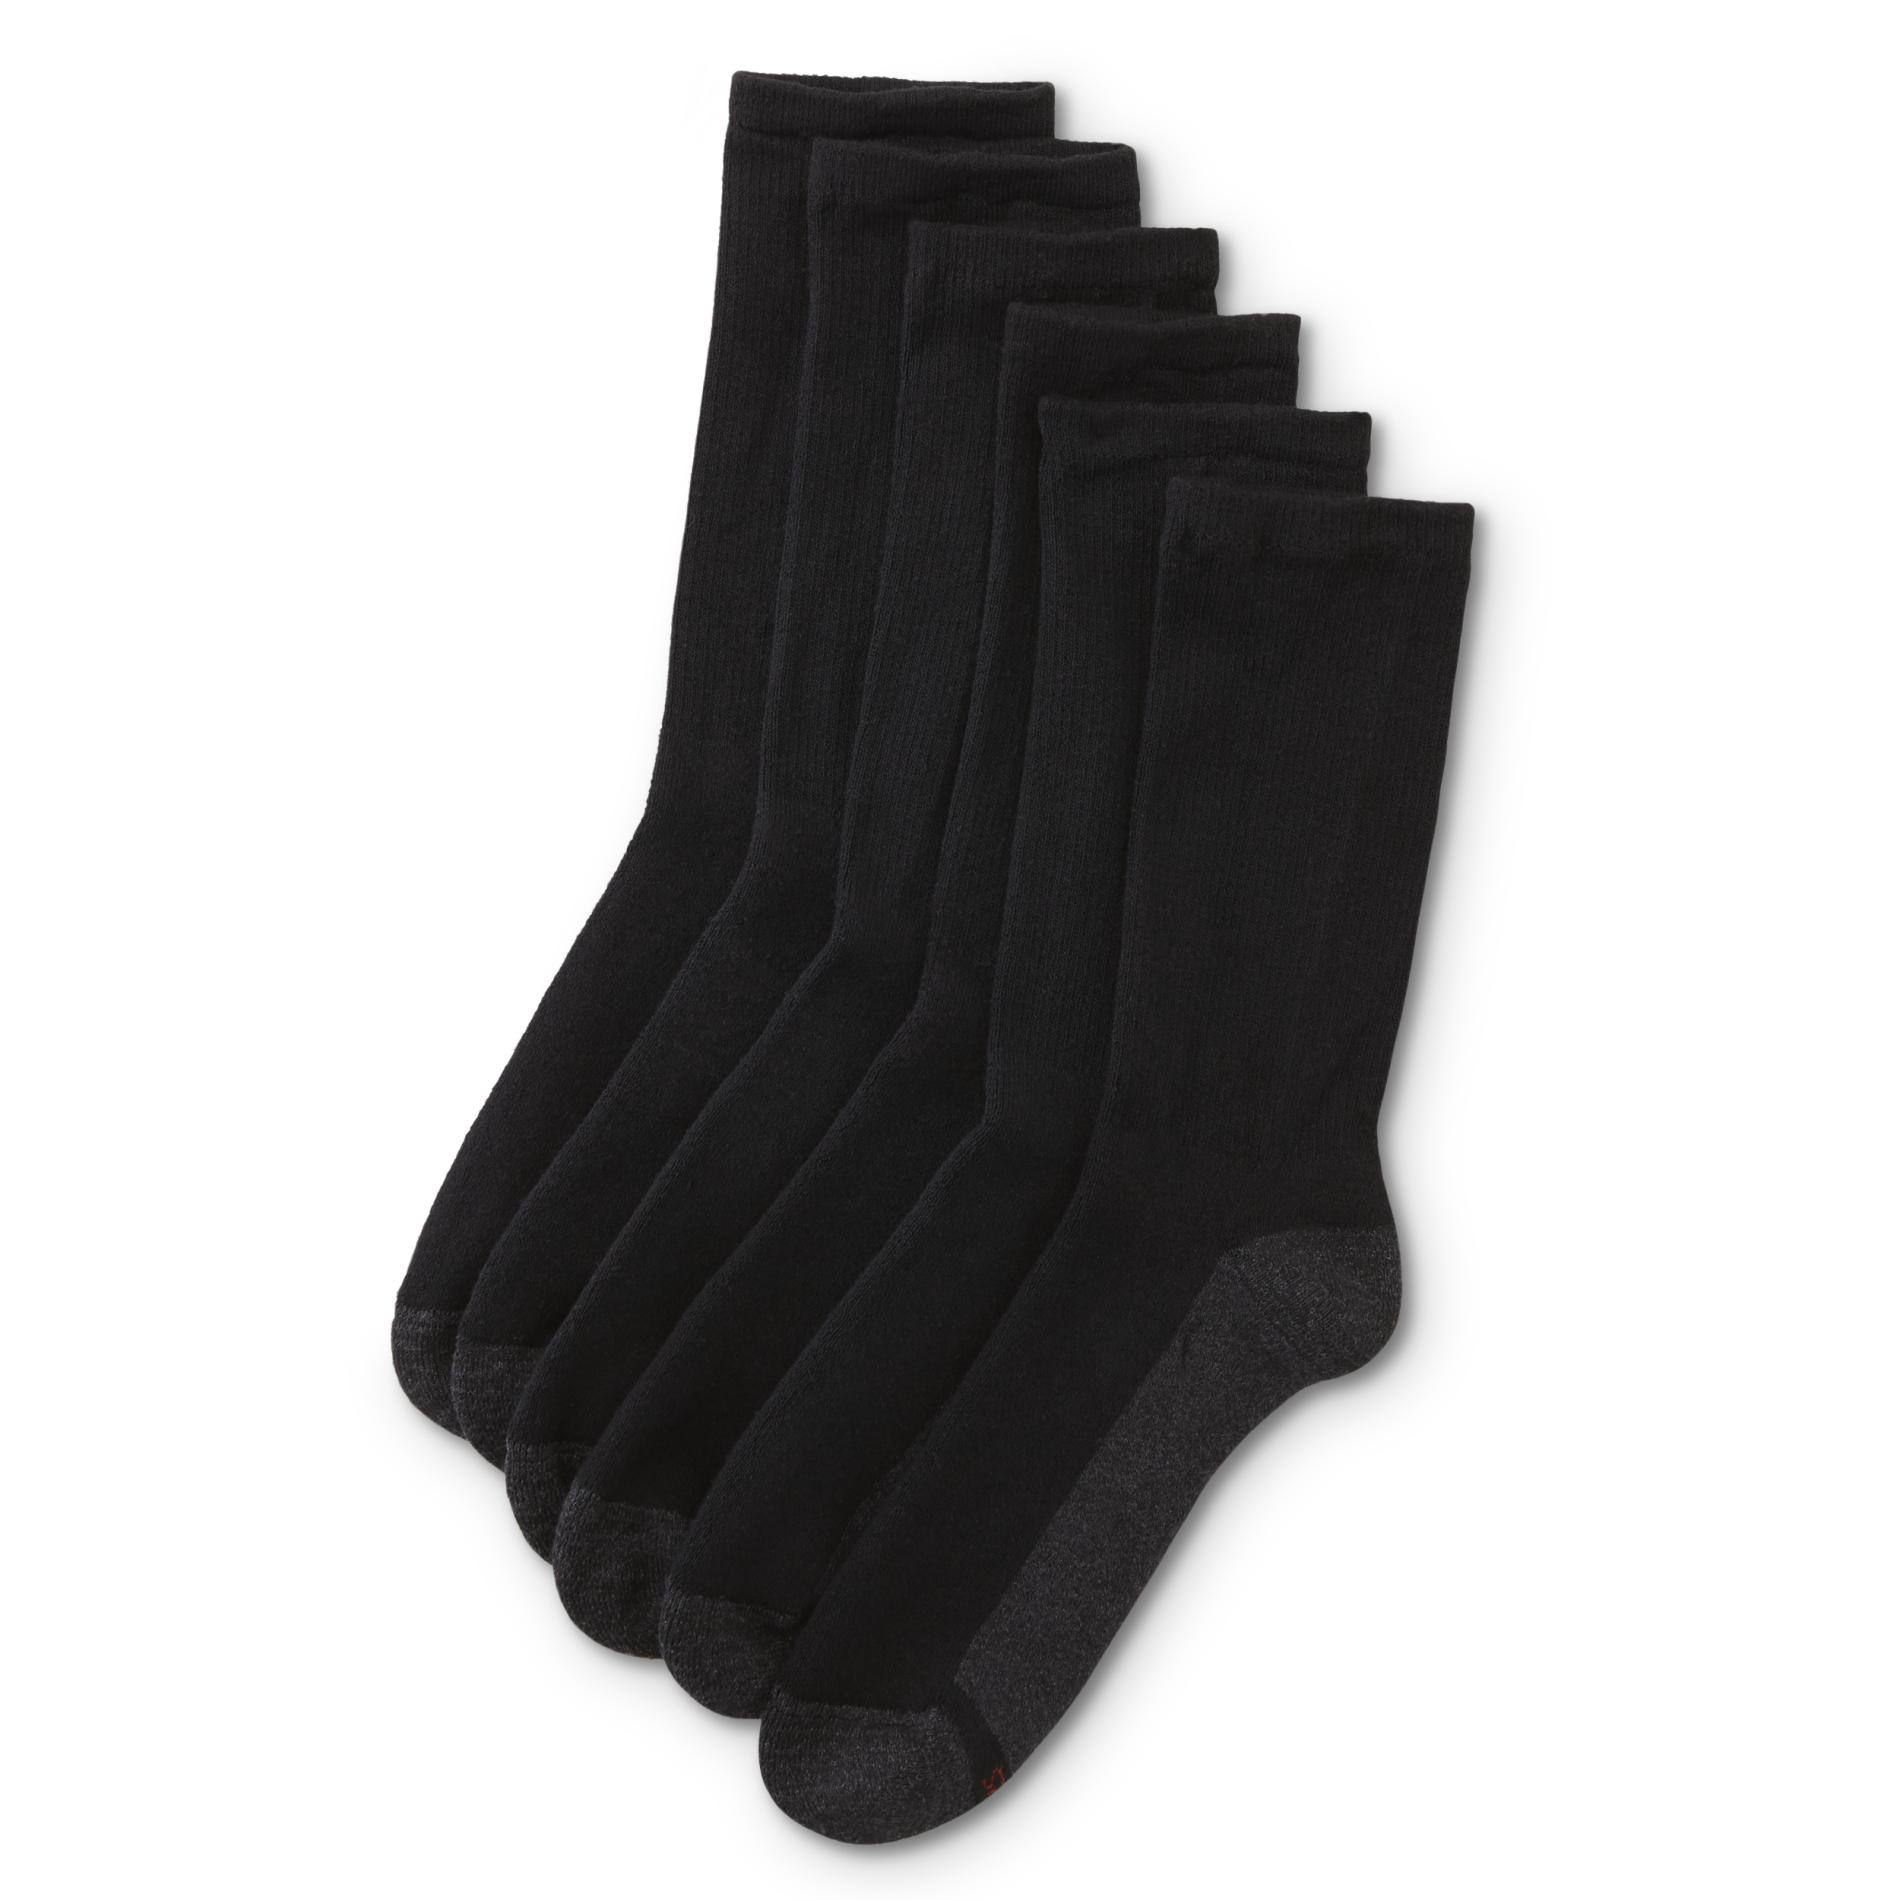 Hanes Men's 6-Pairs ComfortBlend Crew Socks